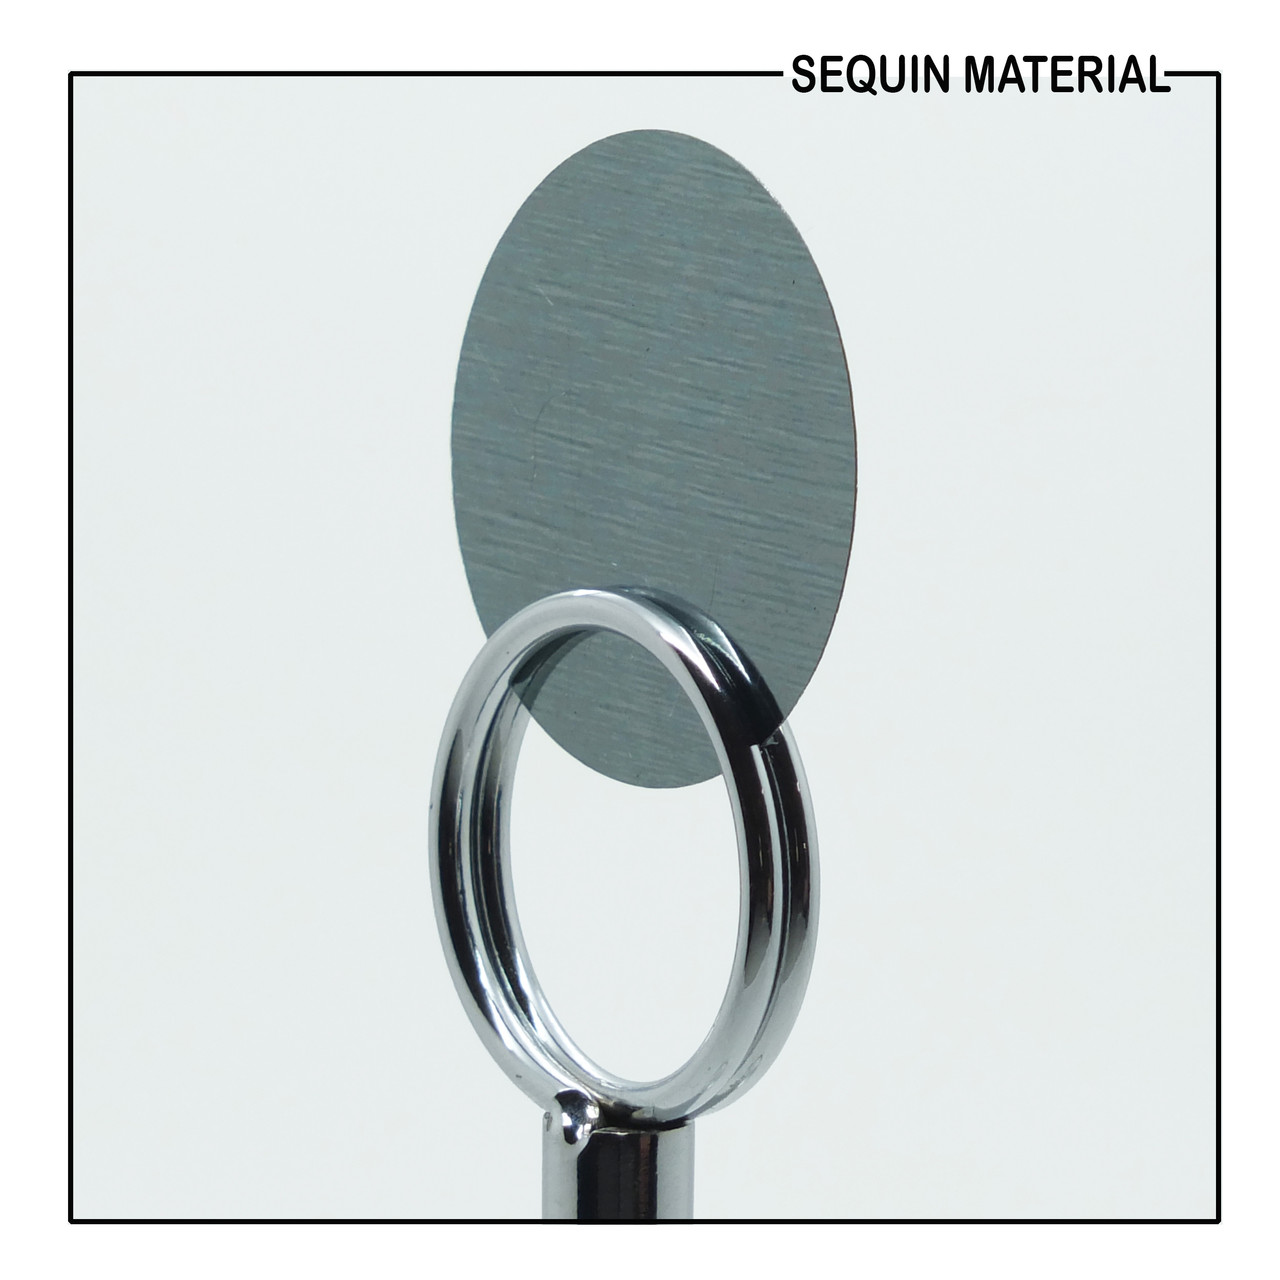 SequinsUSA Hematite Gray Gunmetal Shiny Metallic Sequin Material RK036